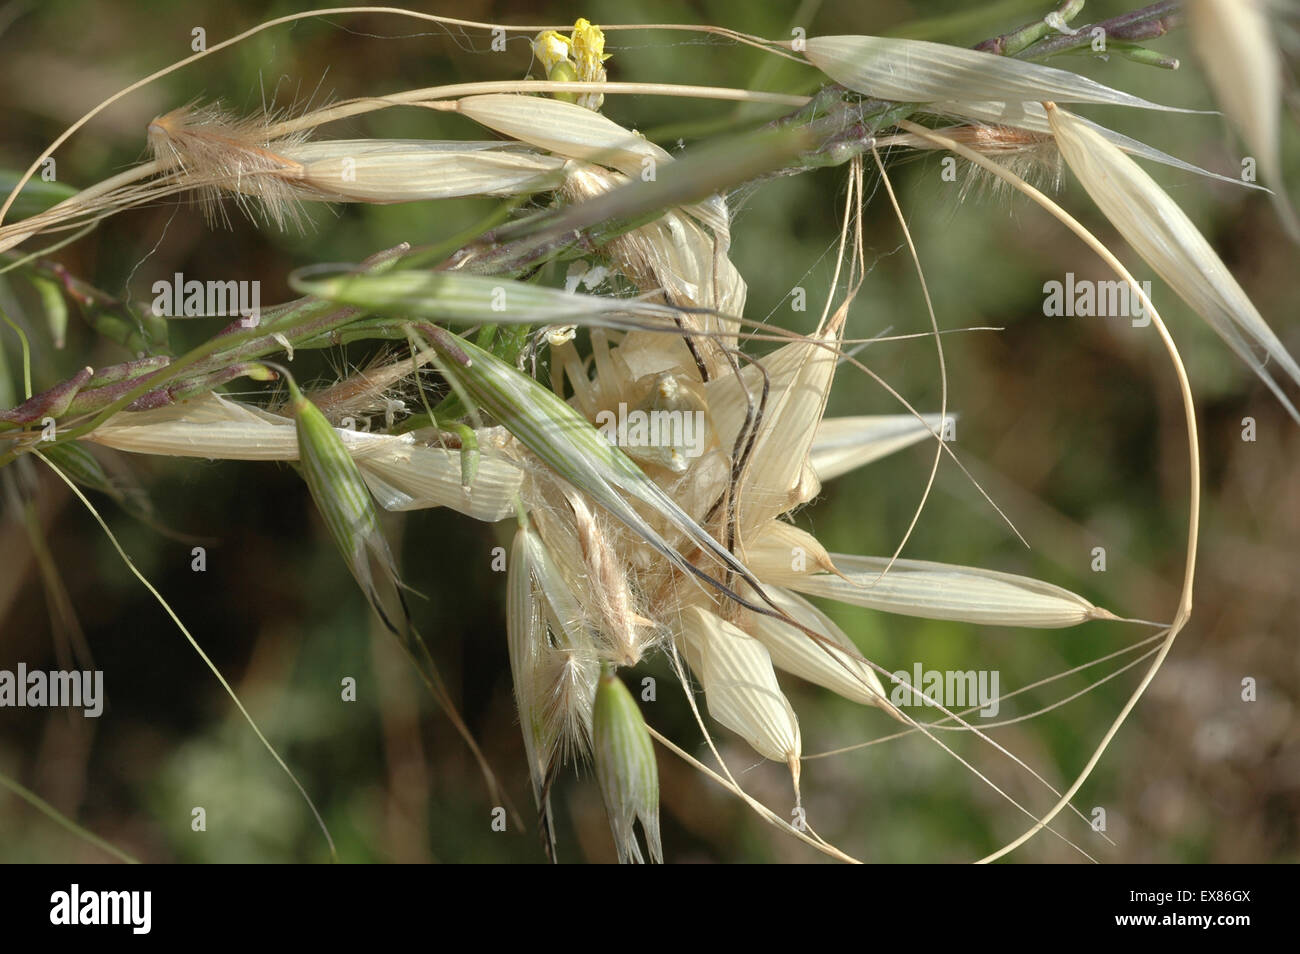 White crab spider (sp) Thomisus onustus, arachnid invertebrate lurking inside an oat / Avena. Lemnos/ Limnos island, Greece. Stock Photo